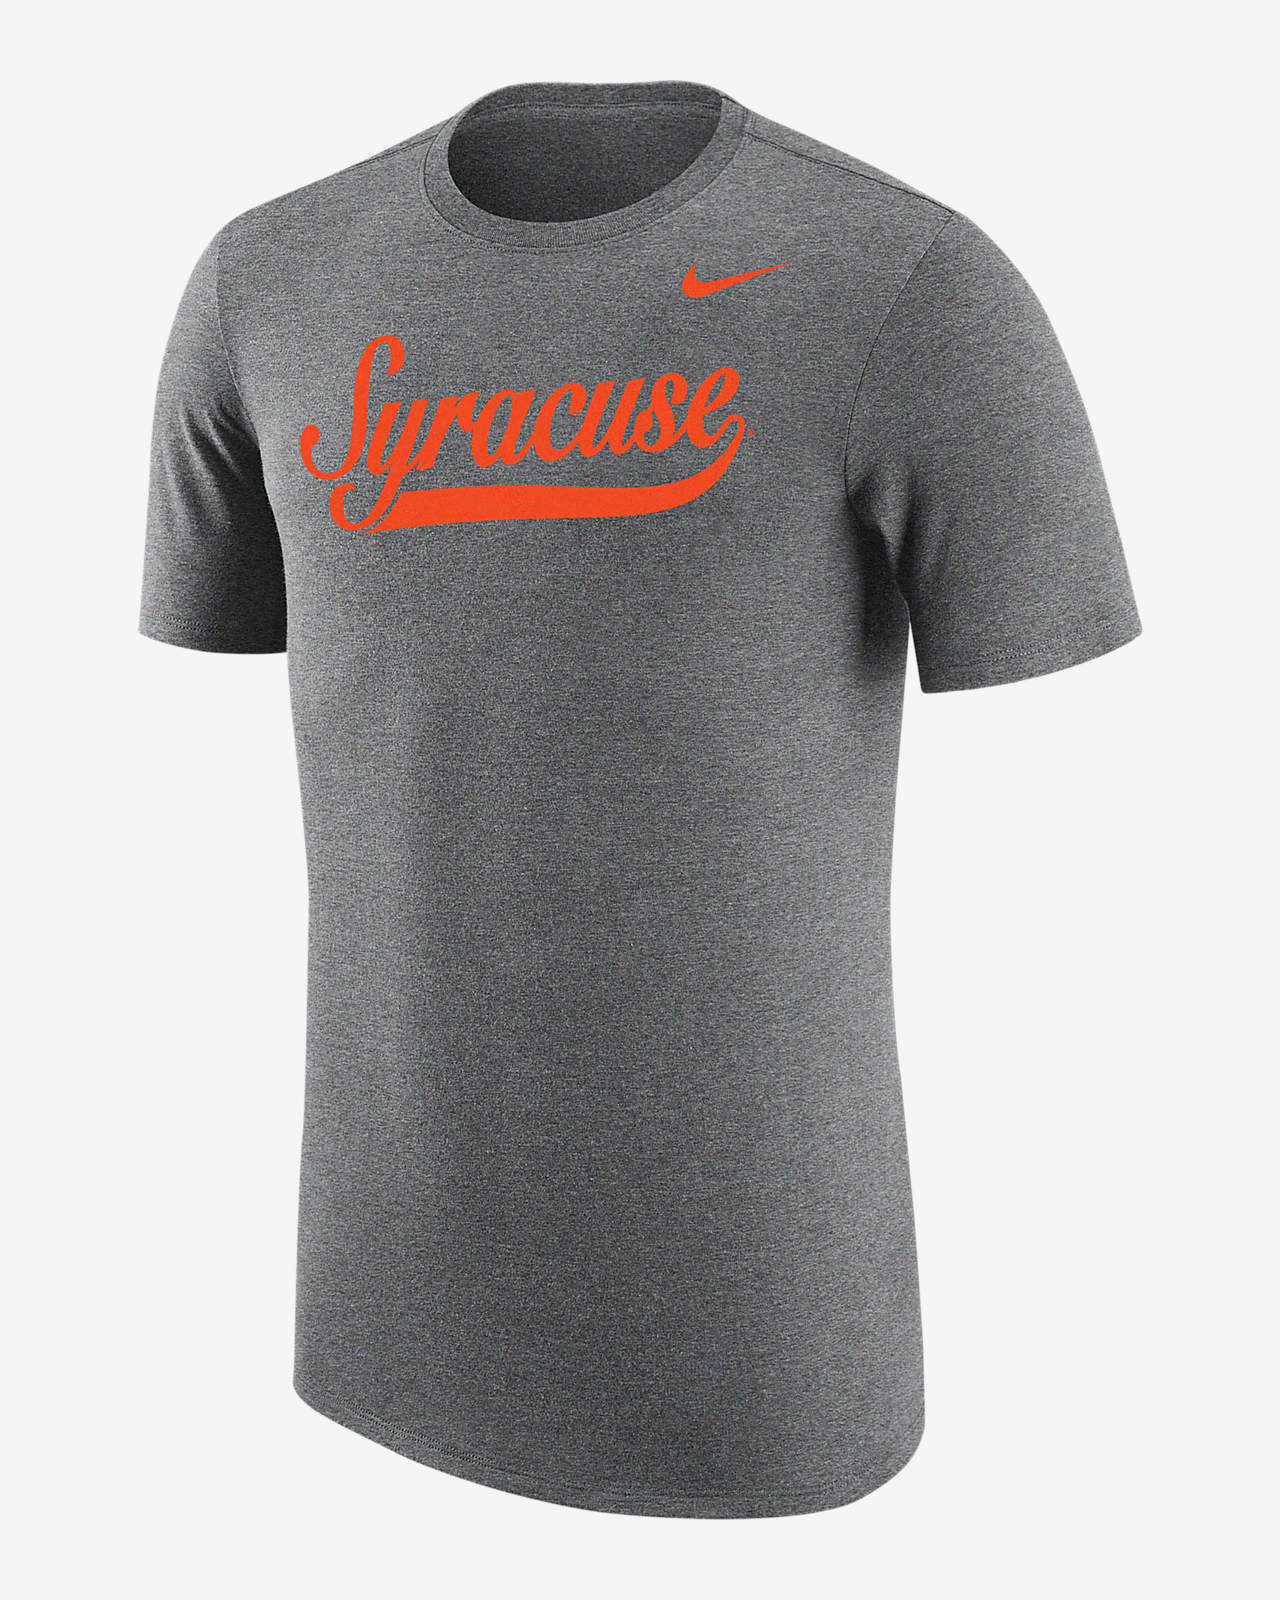 Syracuse Men's Nike College T-Shirt